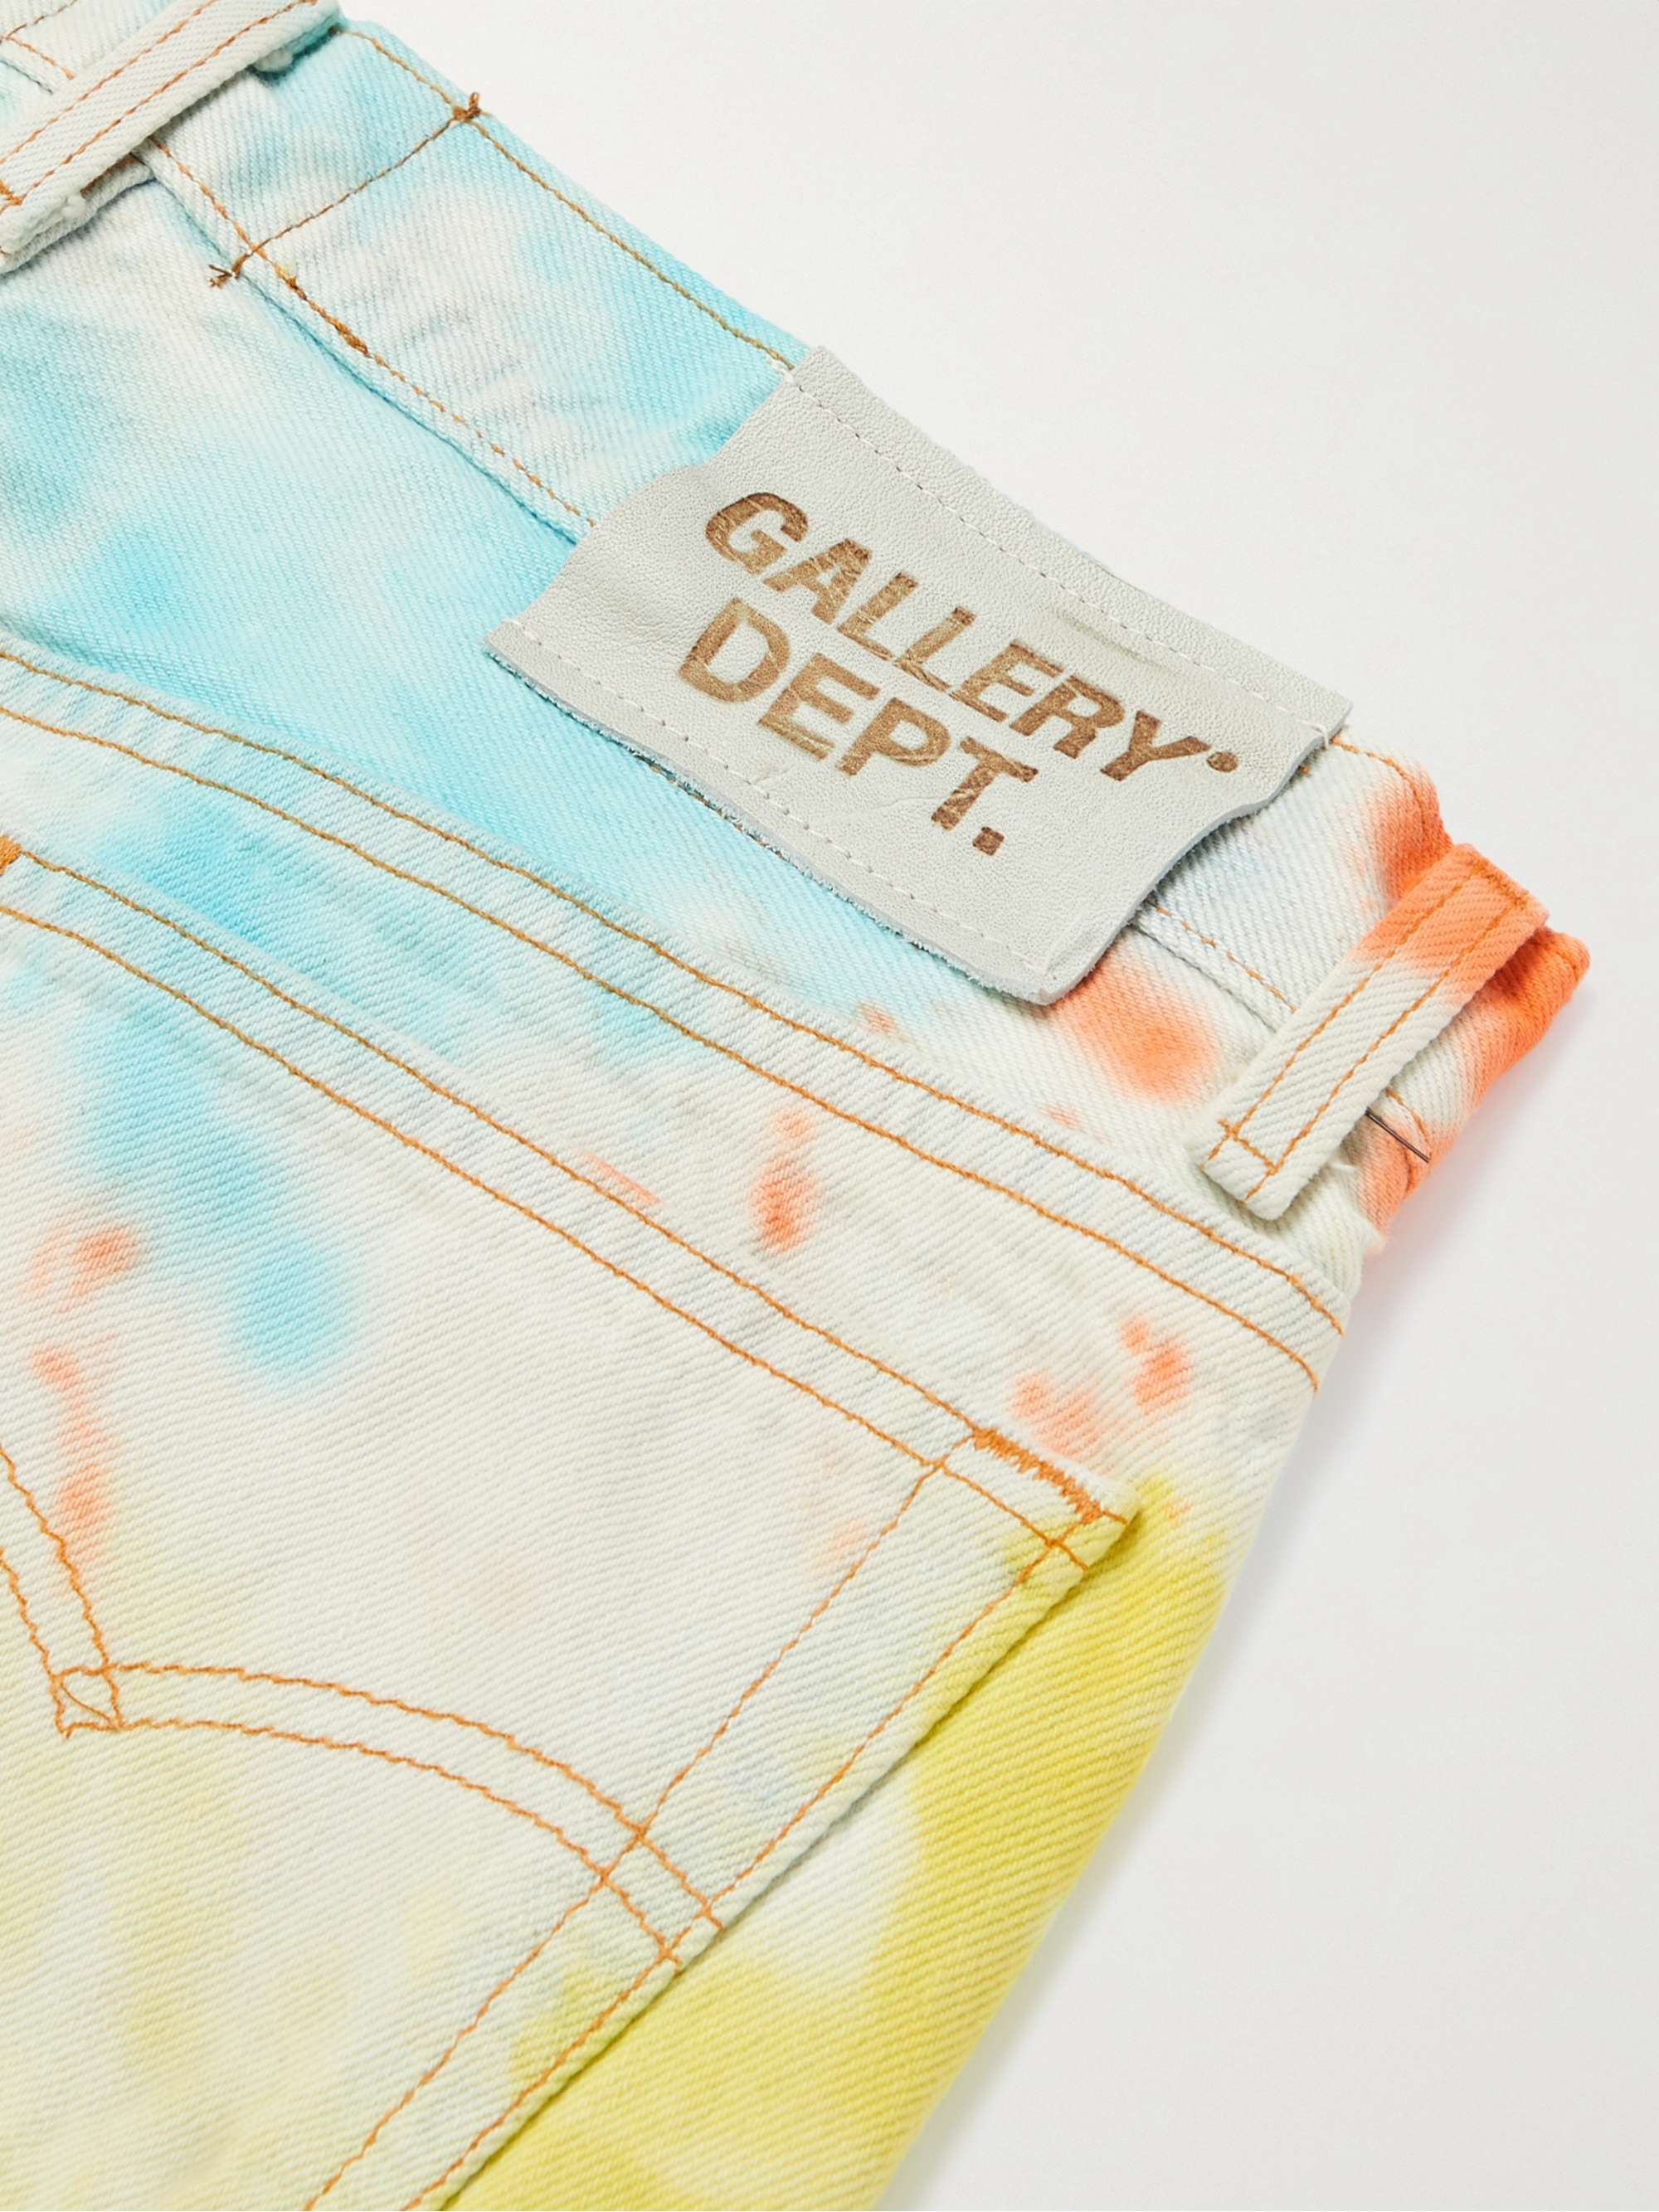 GALLERY DEPT. Marley Distressed Tie-Dyed Denim Jeans